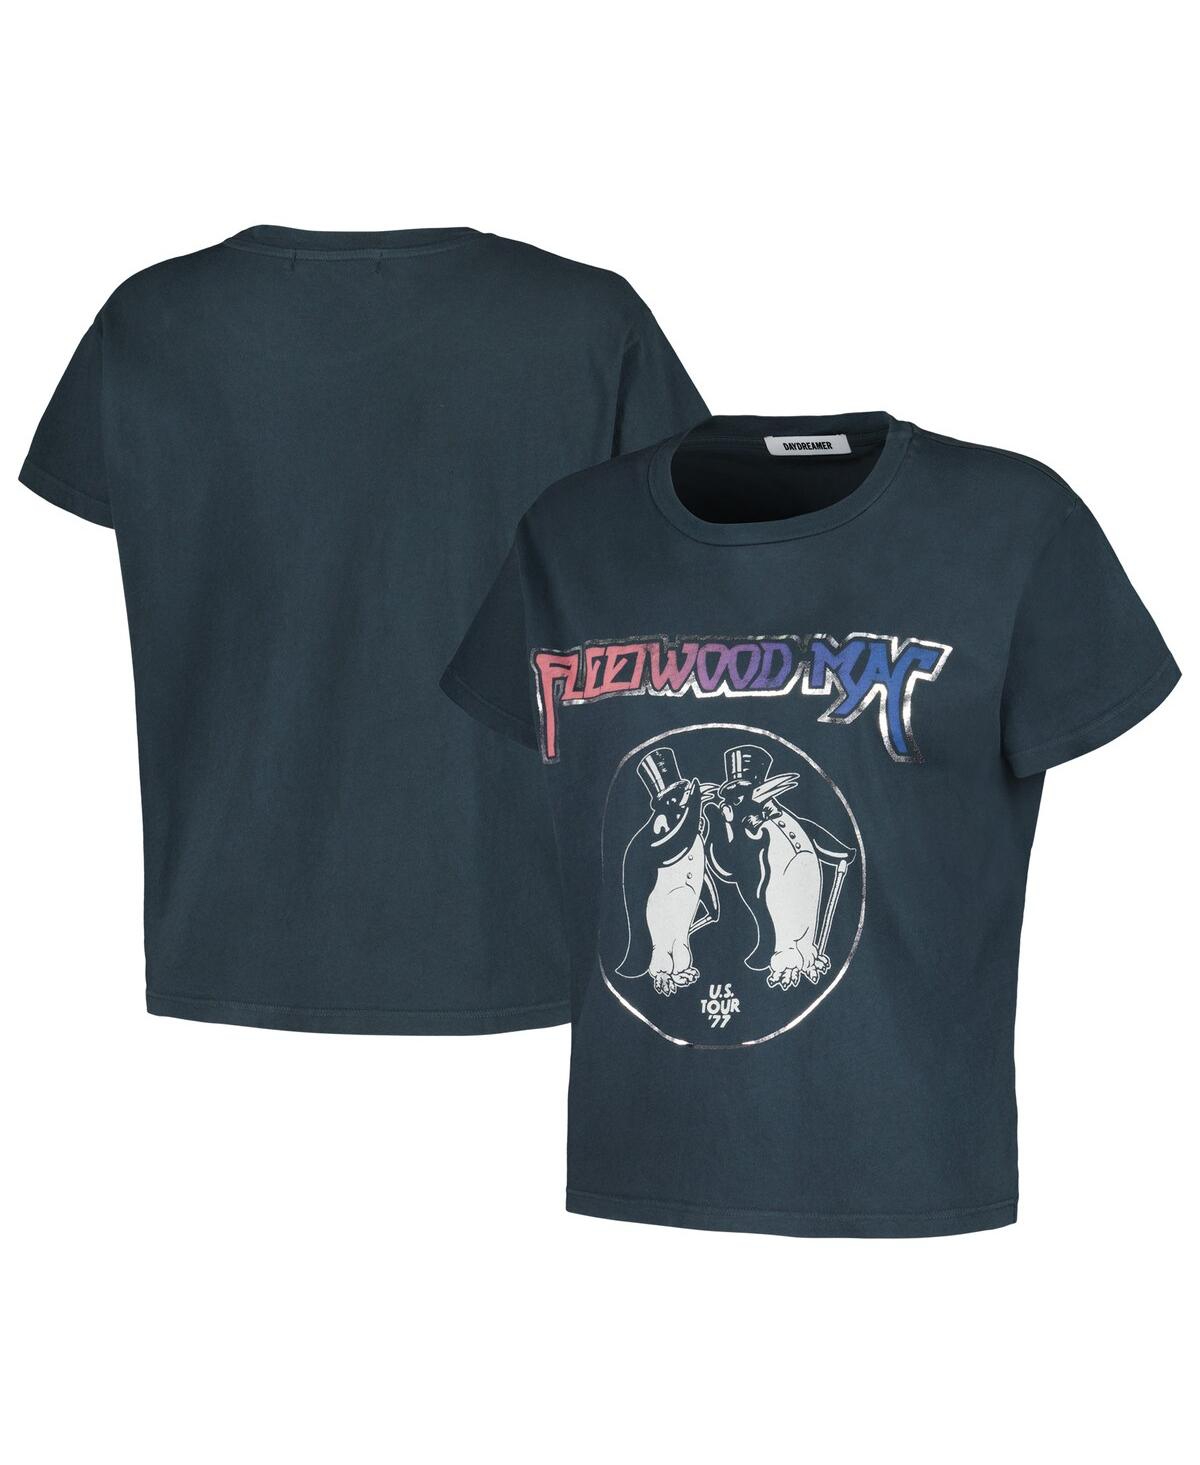 Shop Daydreamer Women's  Black Fleetwood Mac U.s. Tour 1977 Graphic T-shirt